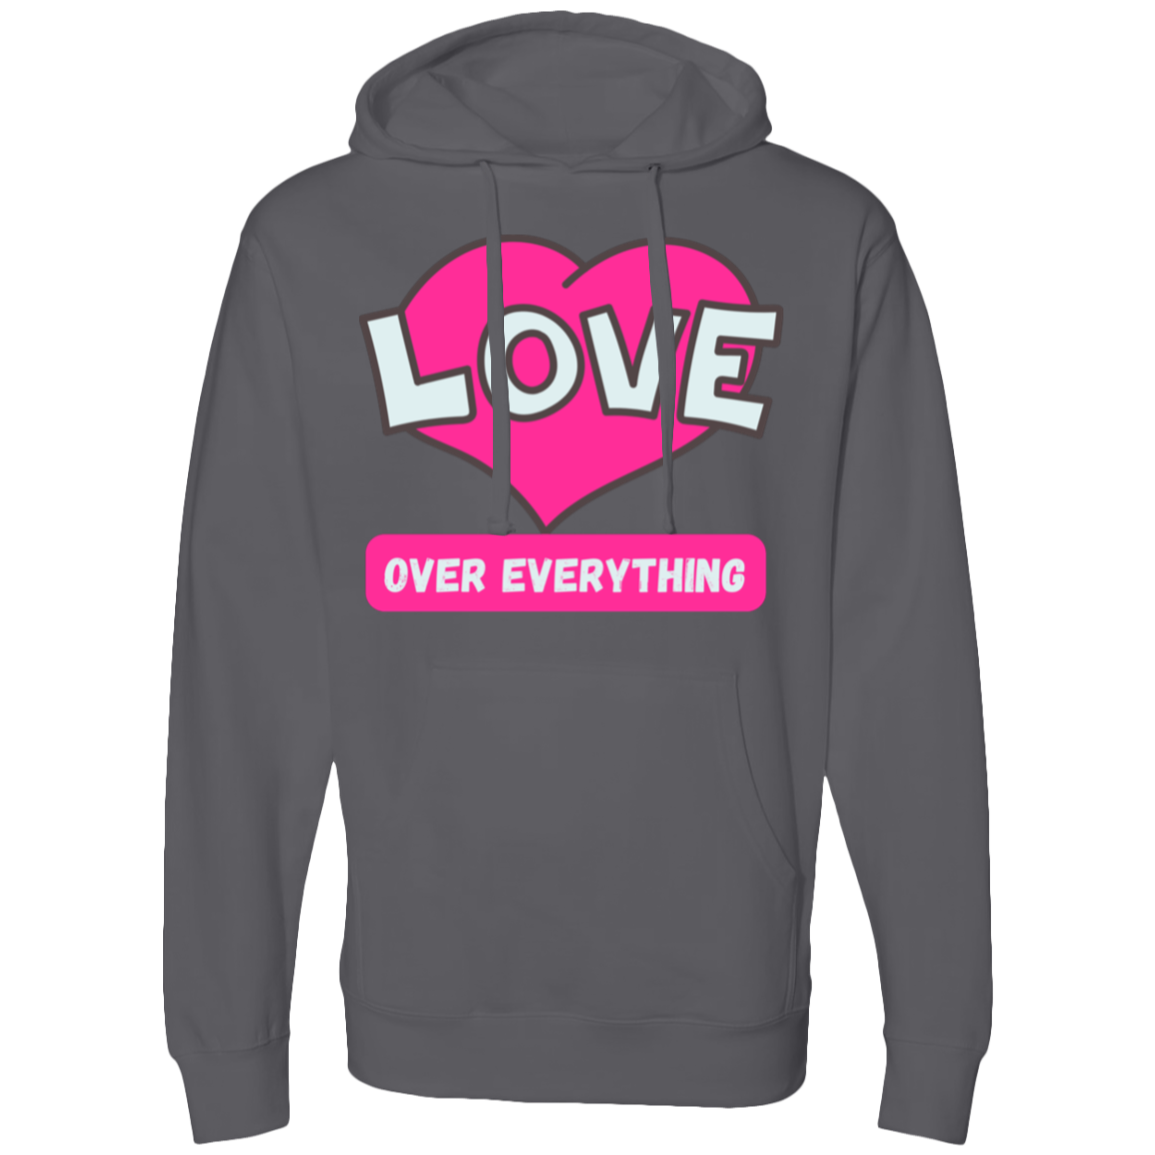 Love over everything!  Hooded Sweatshirt